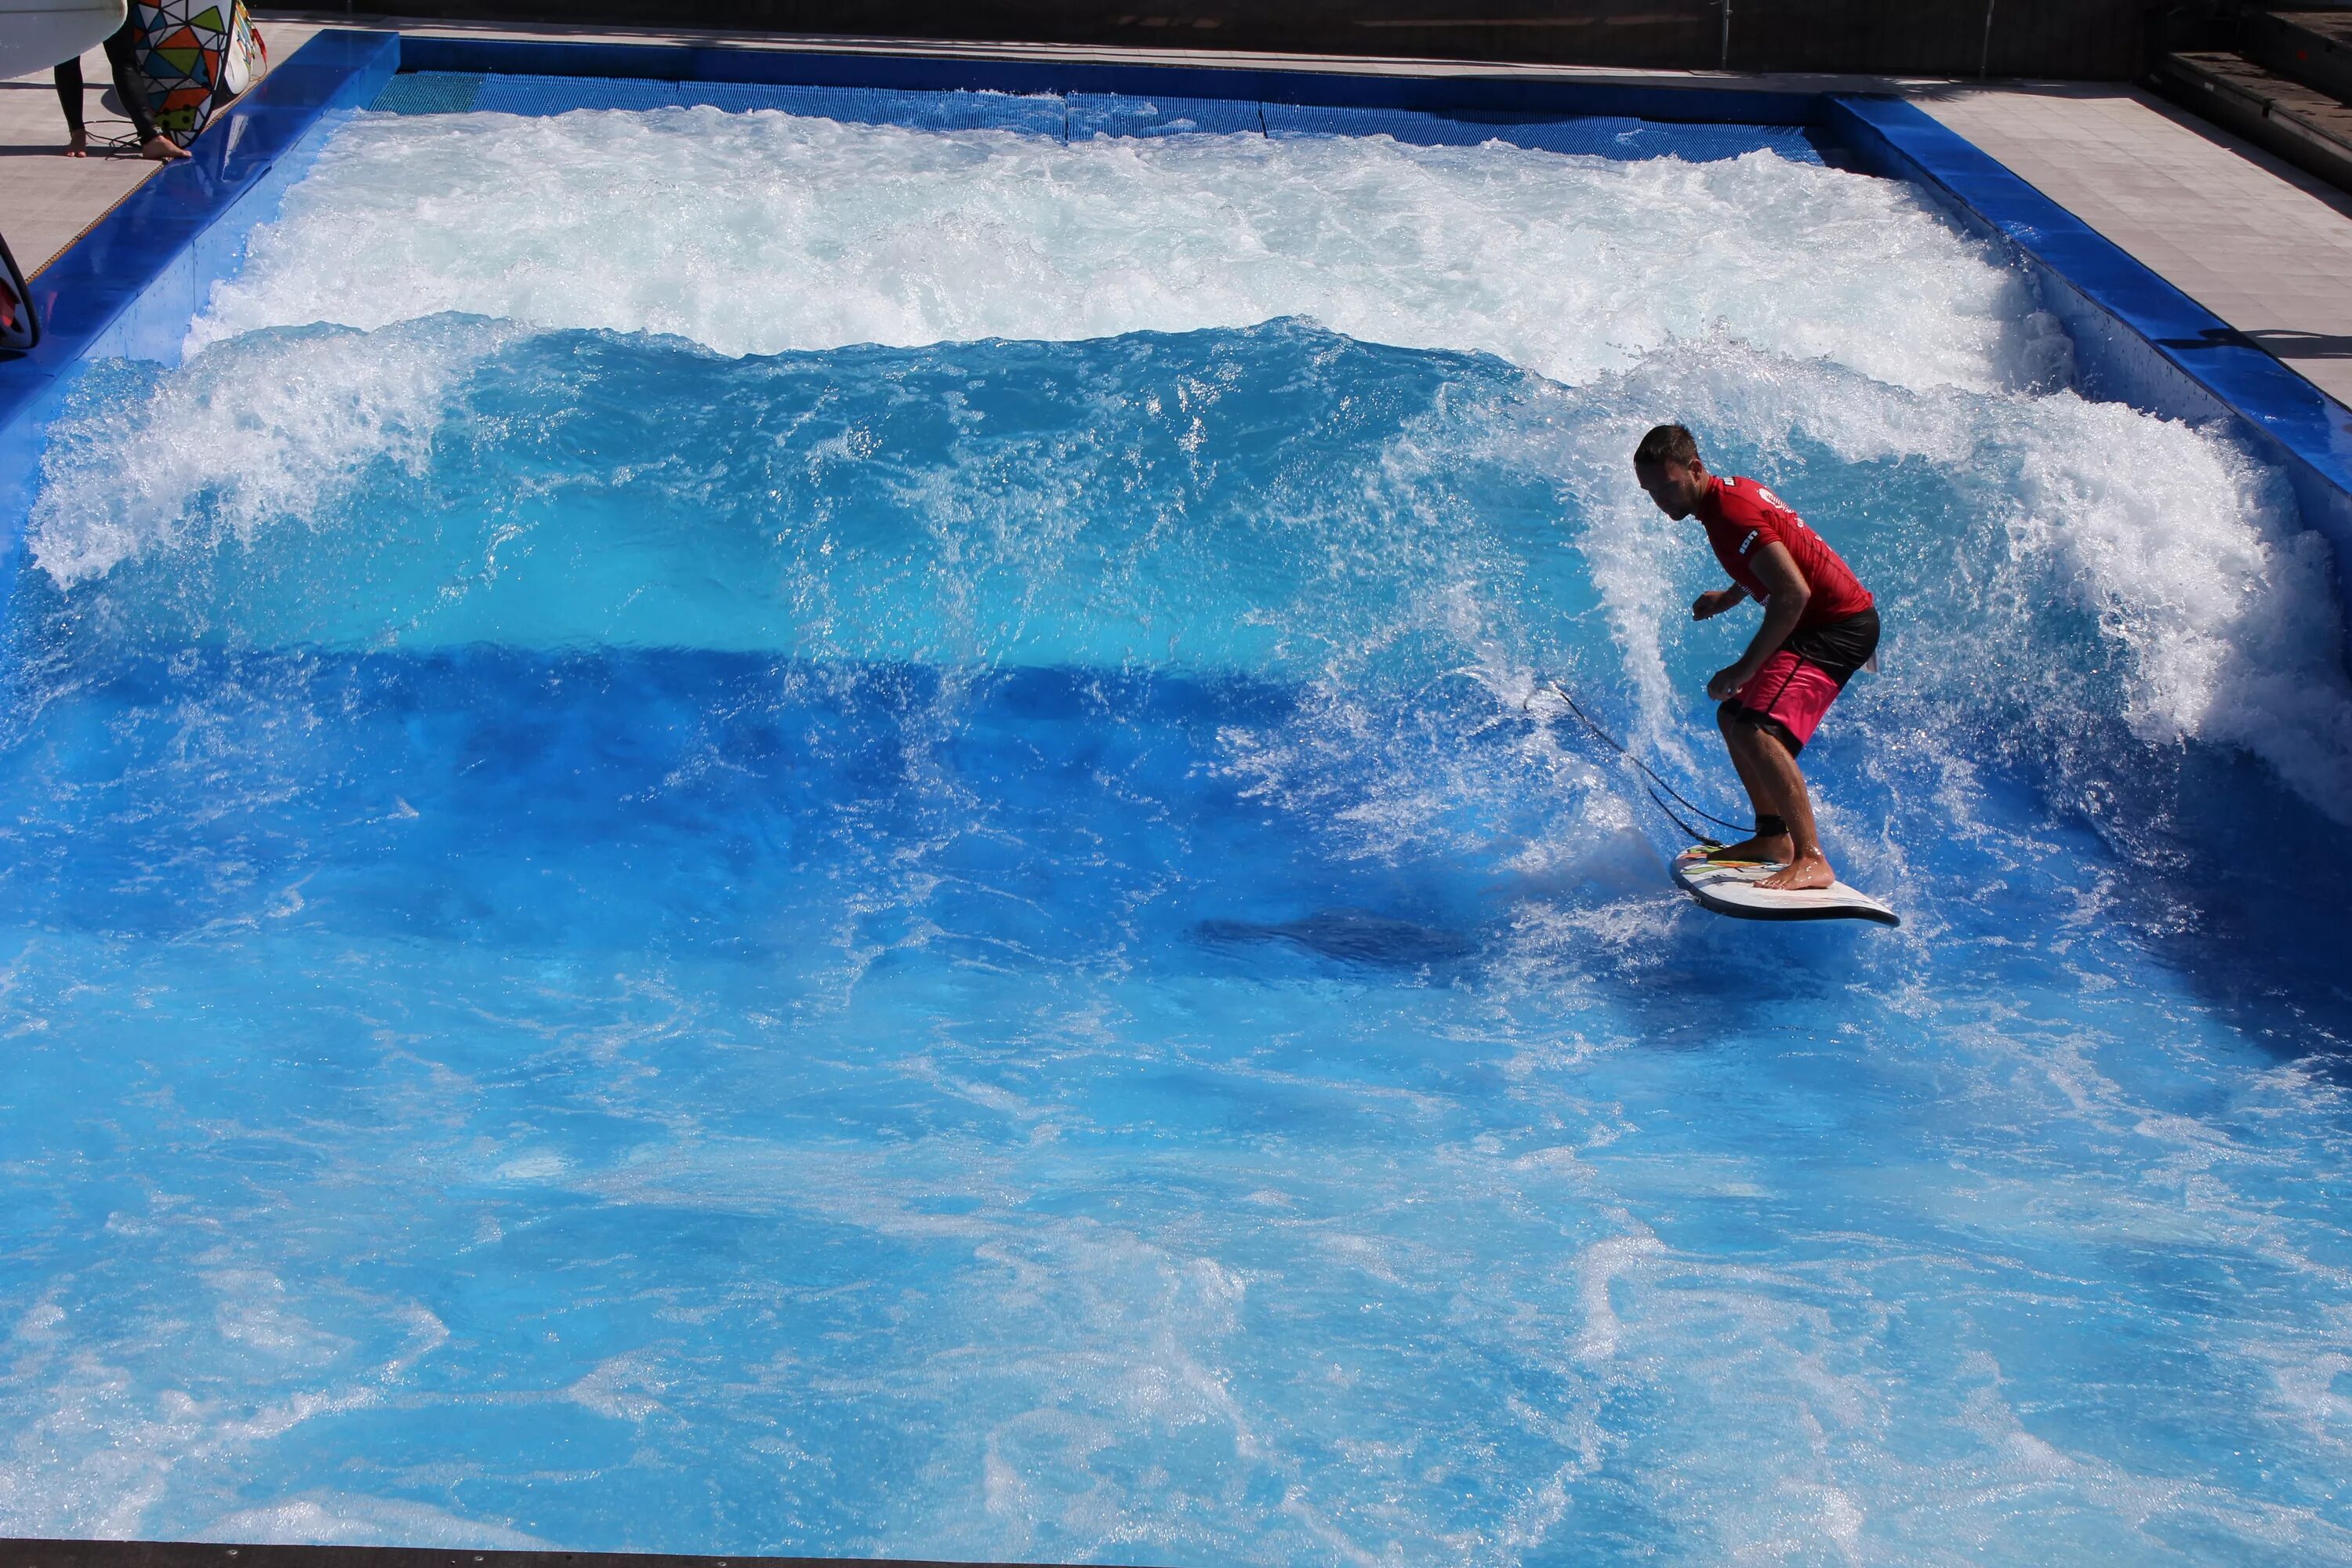 Аквапарк Питерлэнд серфинг. Искусственная волна. Искусственная волна для серфинга. Бассейн с искусственной волной.